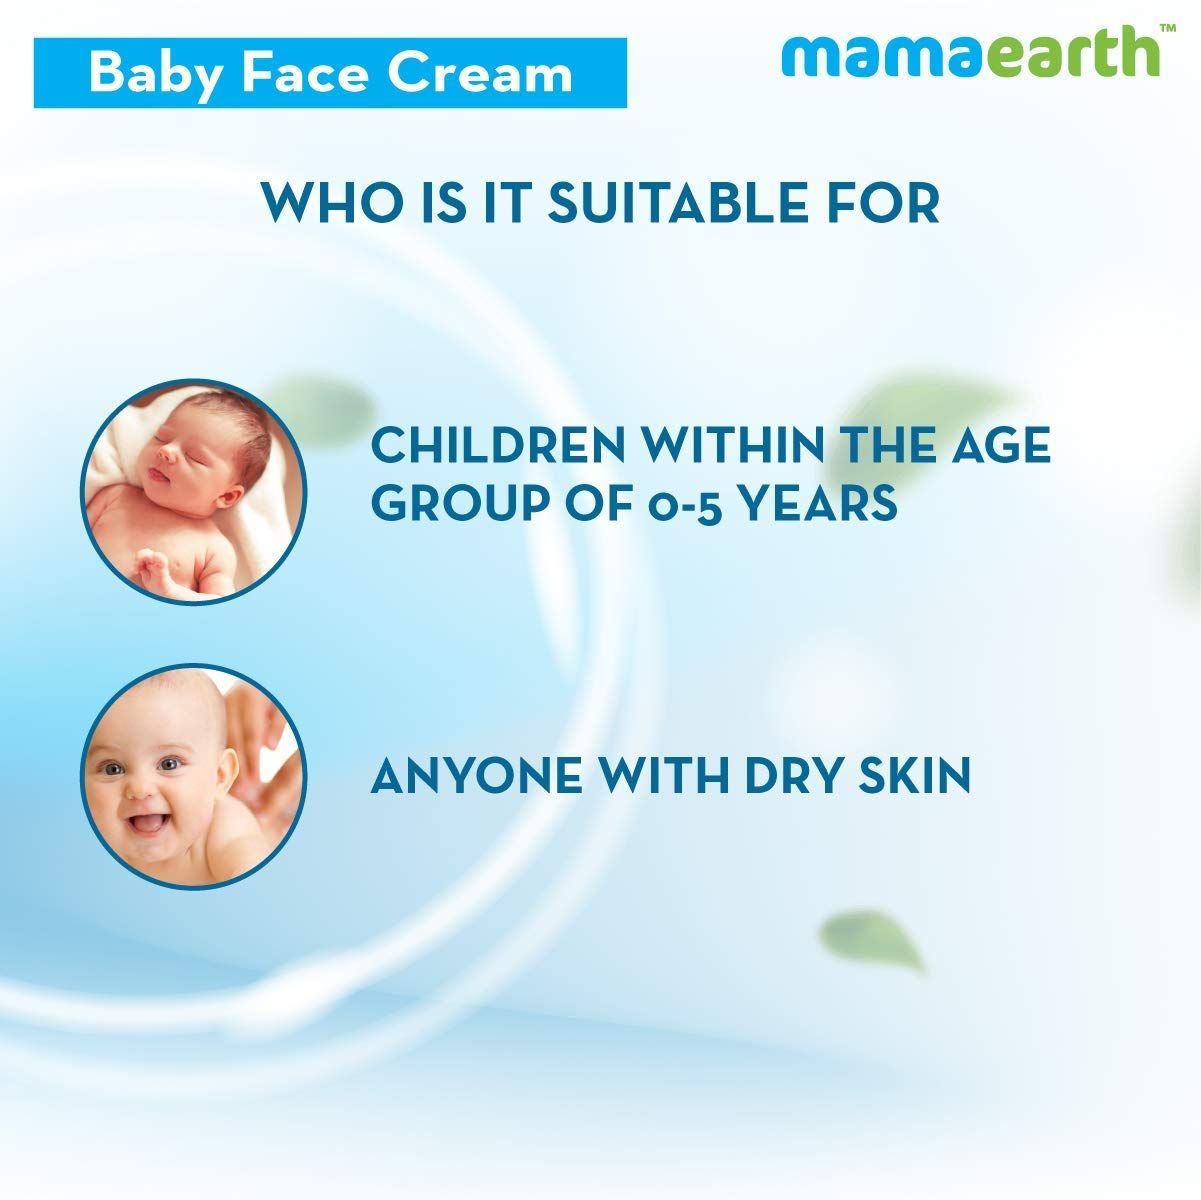 Milky Soft Face Cream With Murumuru Butter for Babies, 60 ml